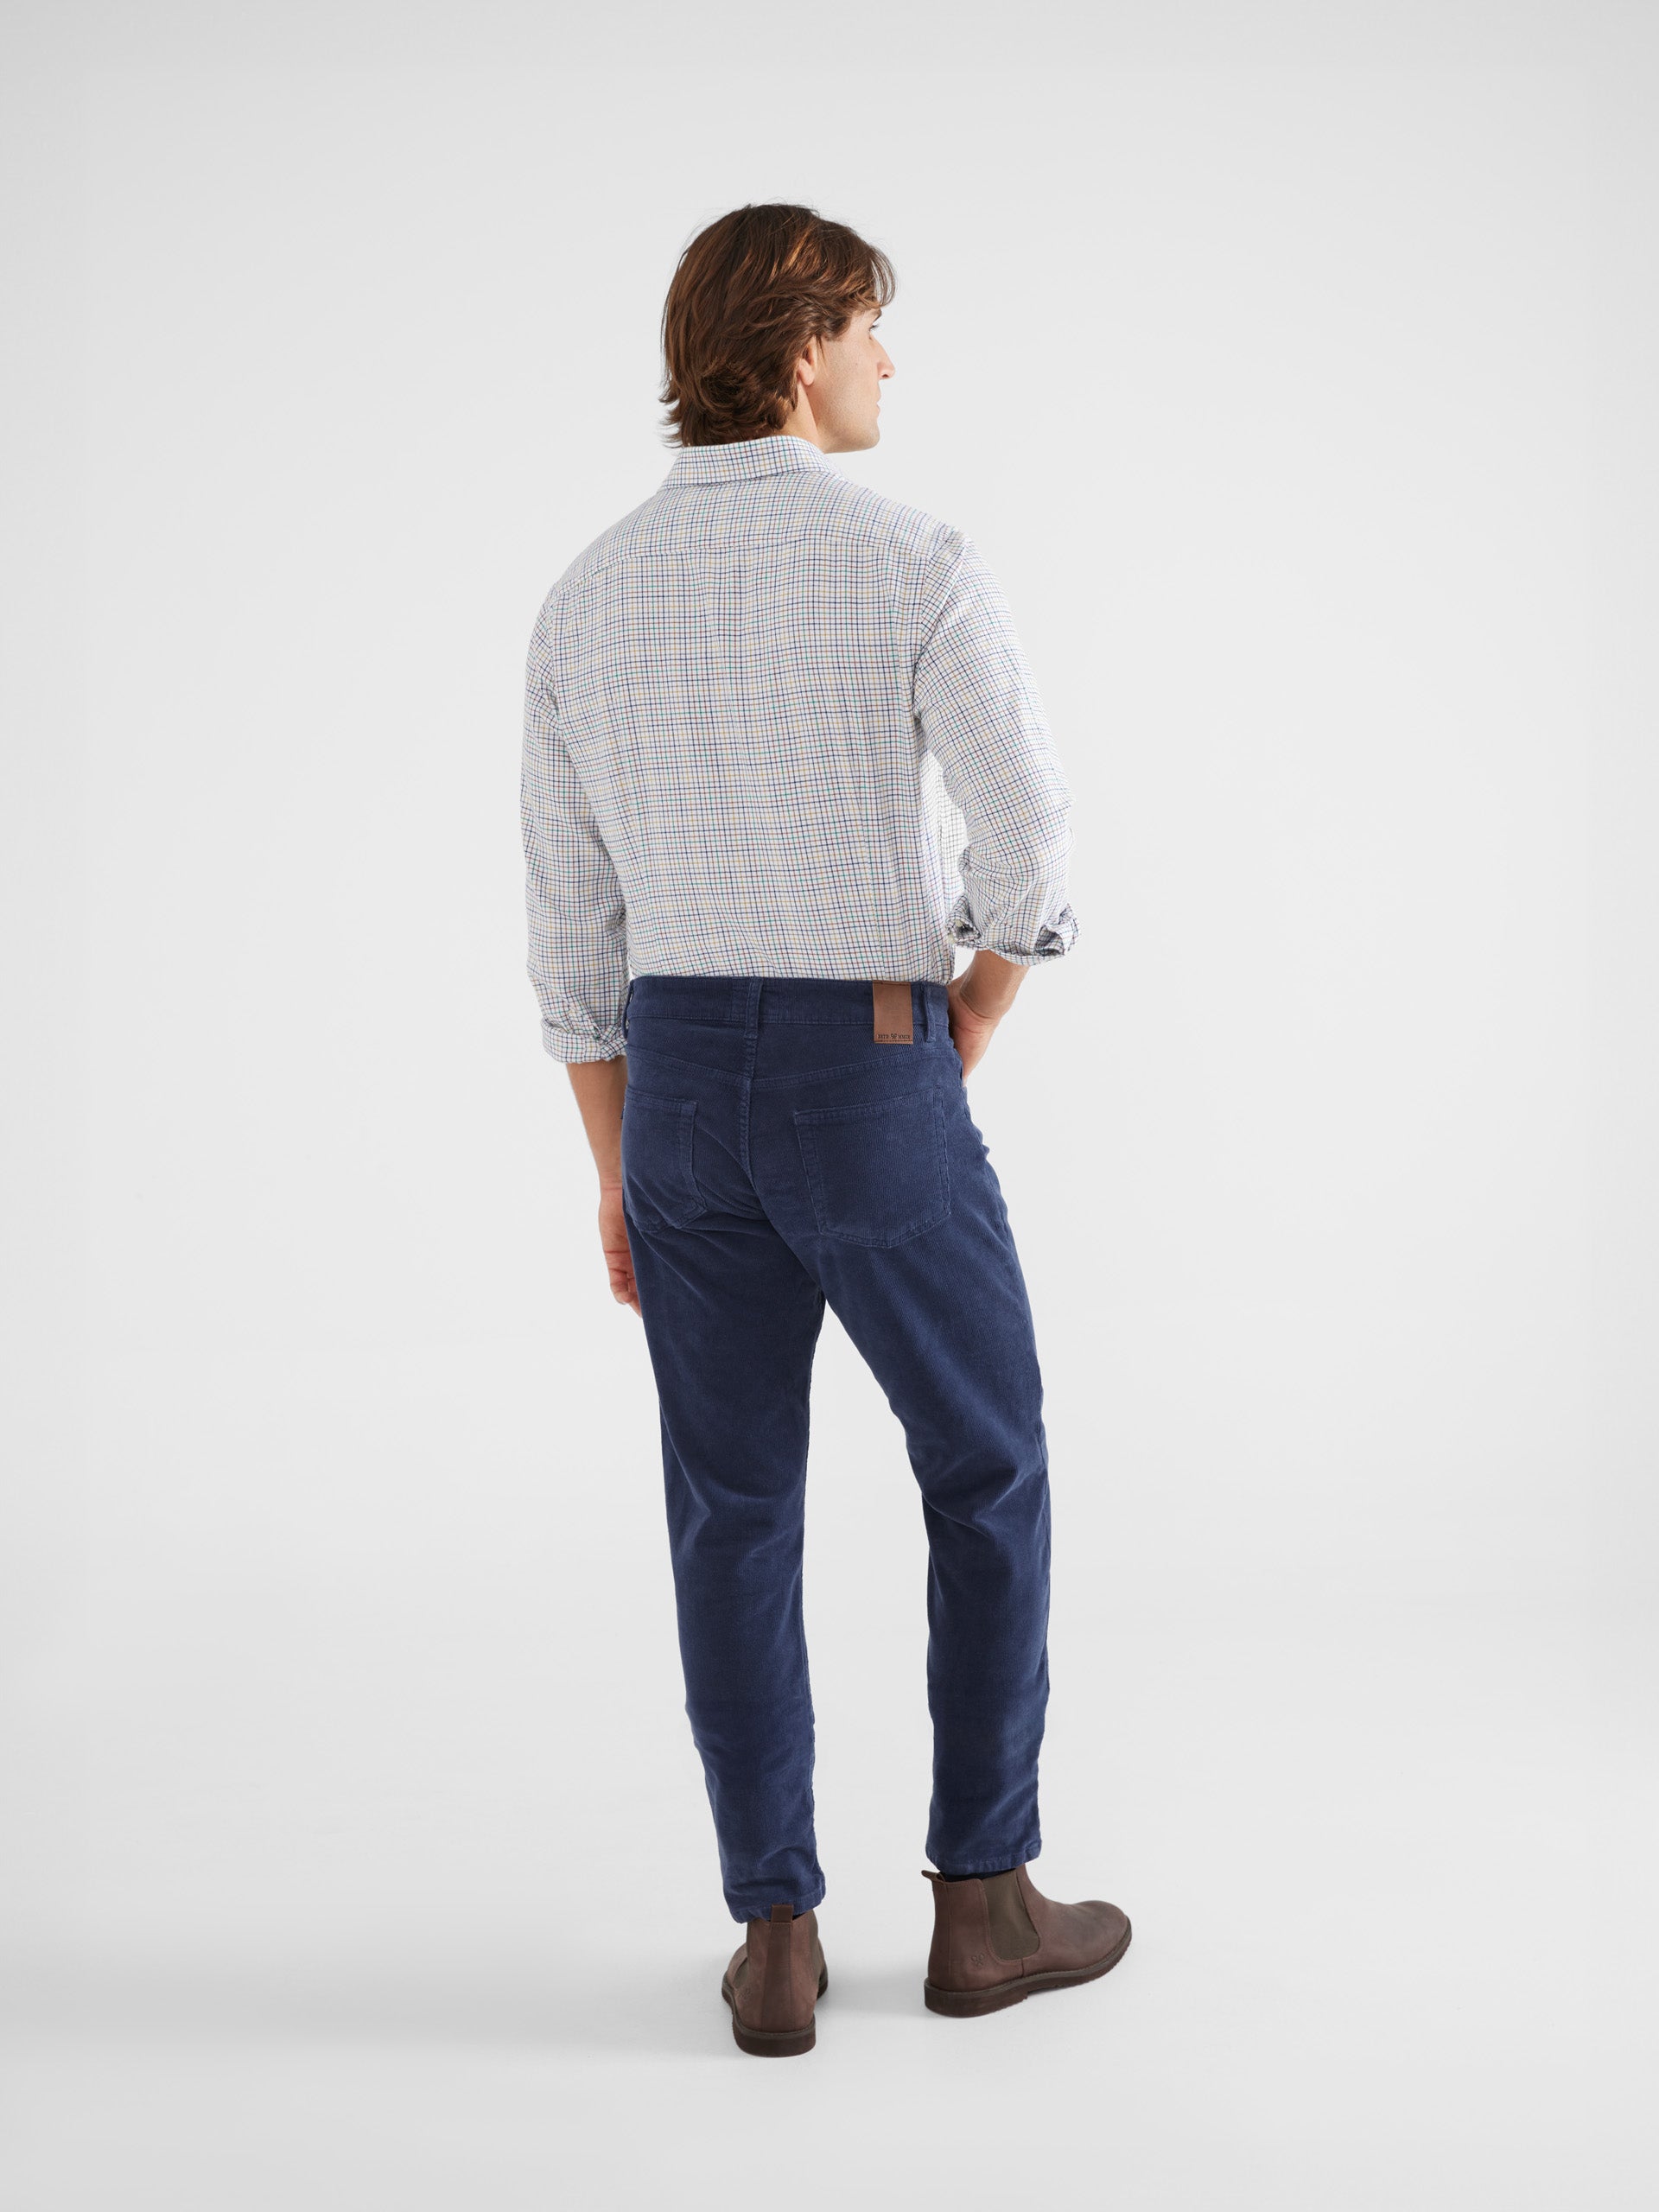 Indigo blue corduroy 5-pocket sport pants